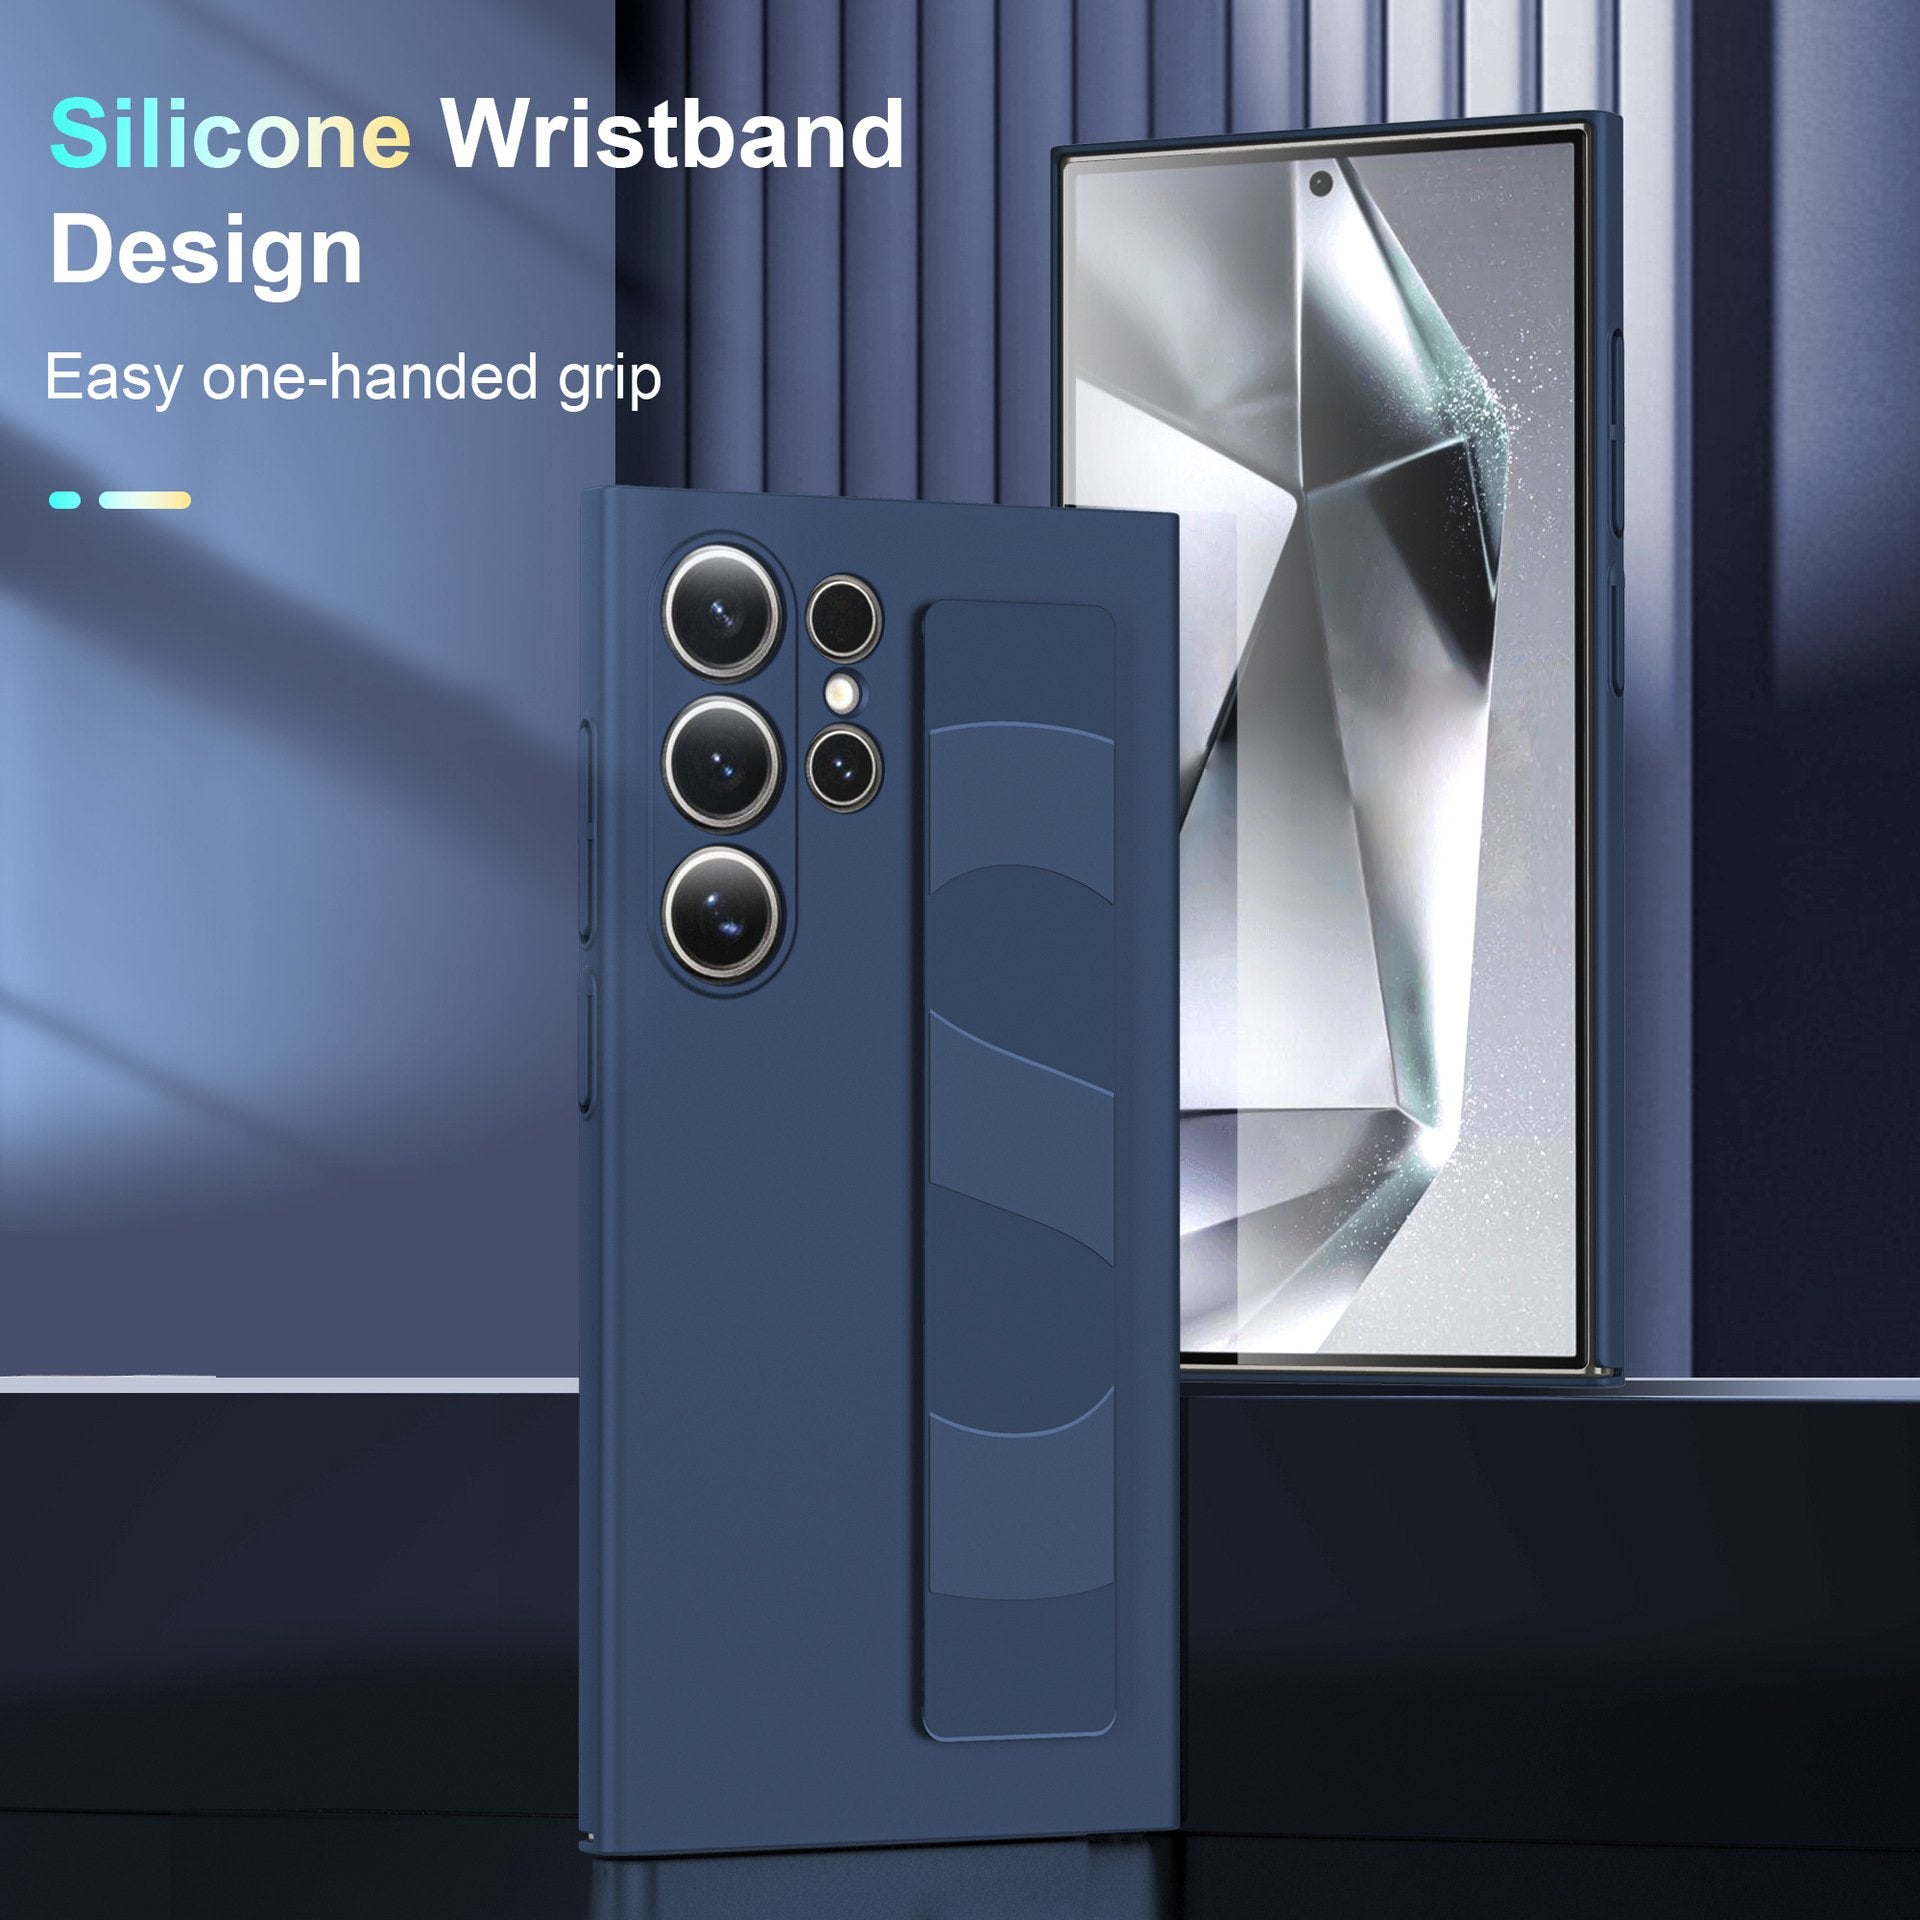 Samsung S24ultra Cell Phone Case Liquid Silicone S24+/s23 Full Wrap Wrist Strap Protective Case - JekoMall